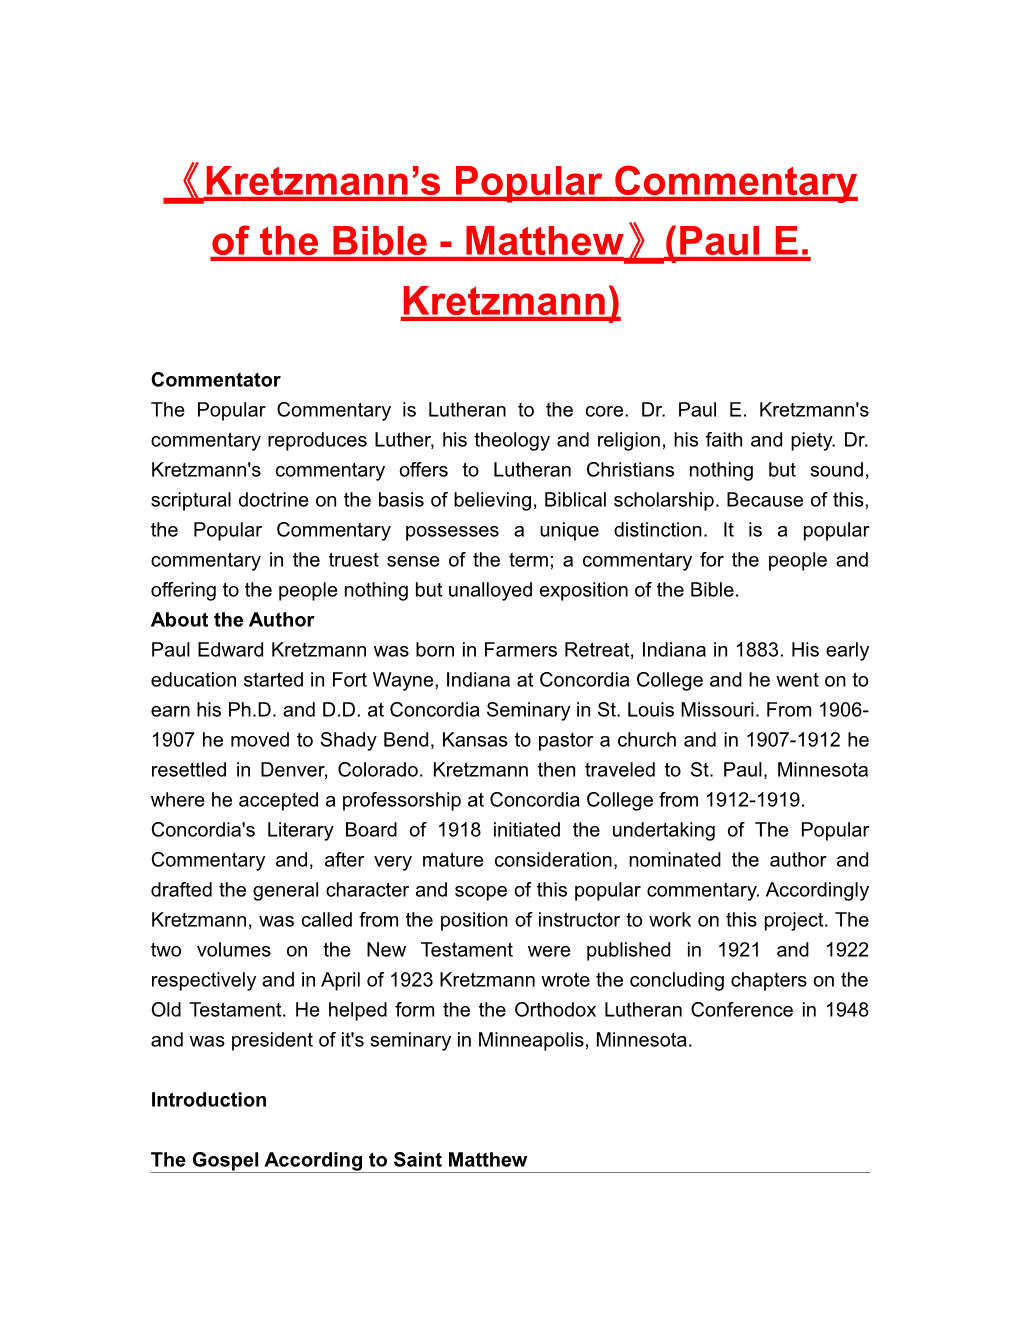 Kretzmann S Popular Commentary of the Bible - Matthew (Paul E. Kretzmann)